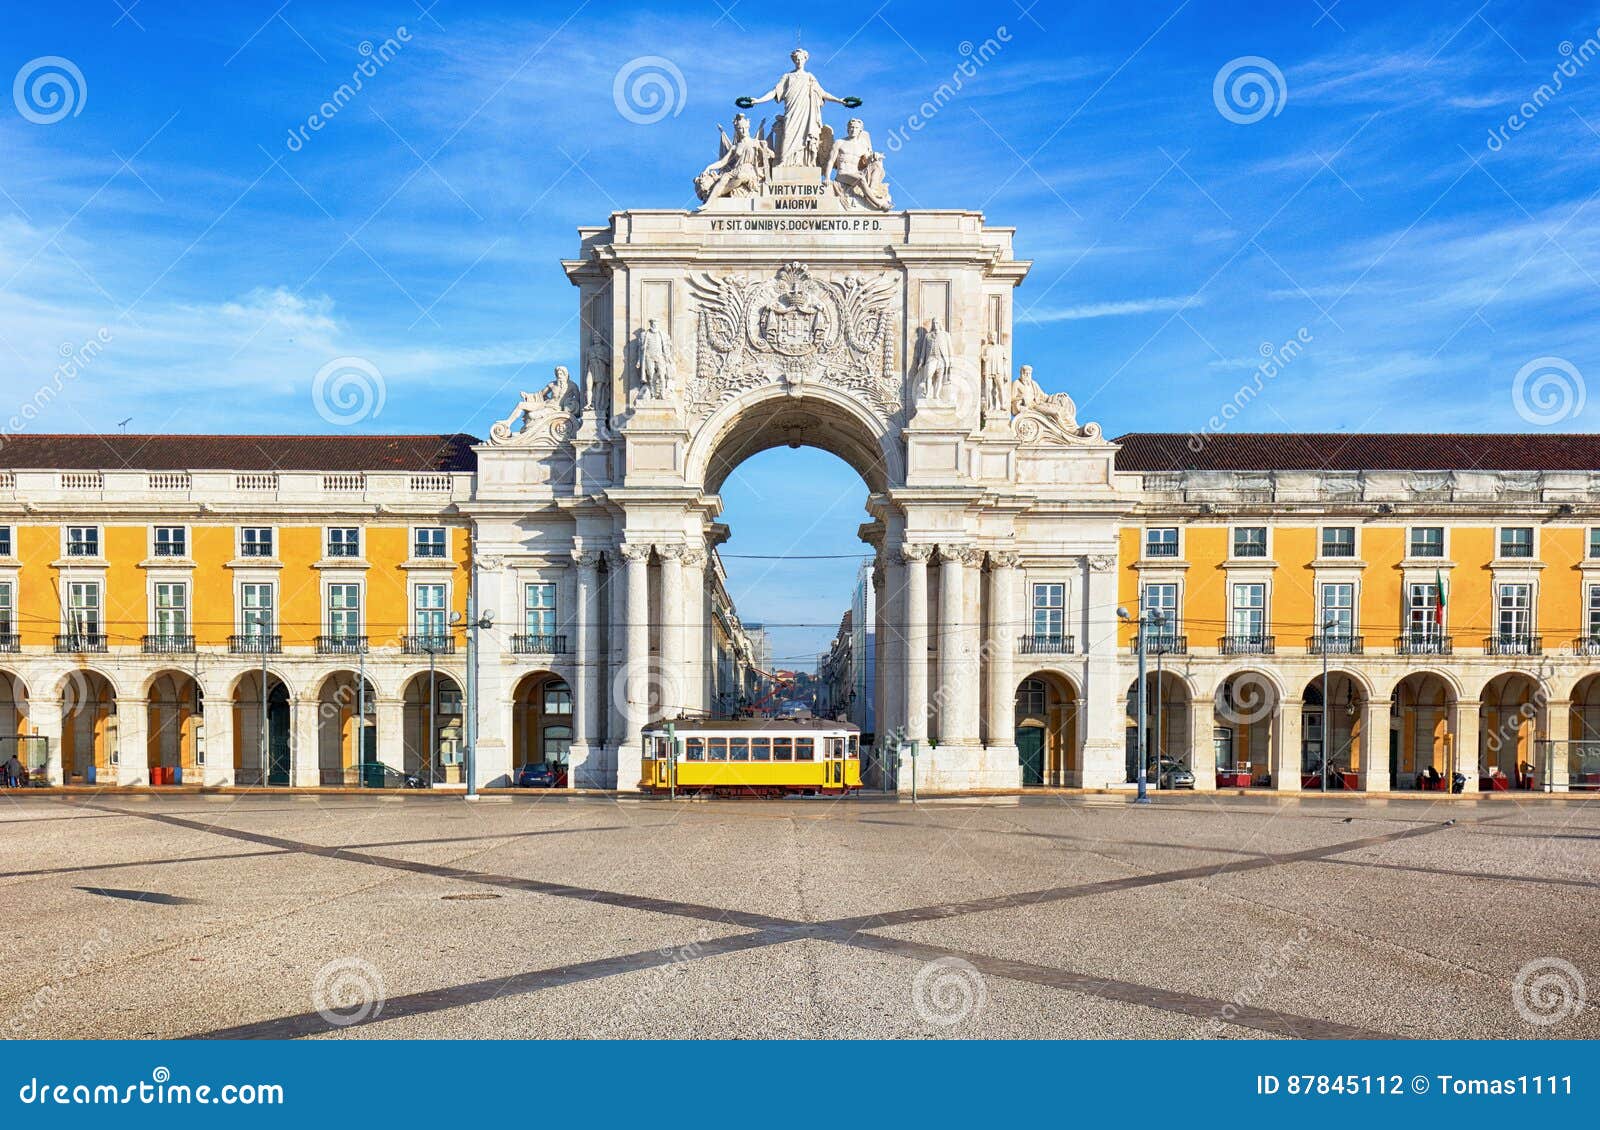 praca do comercio with yellow tram, lisbon, portugal